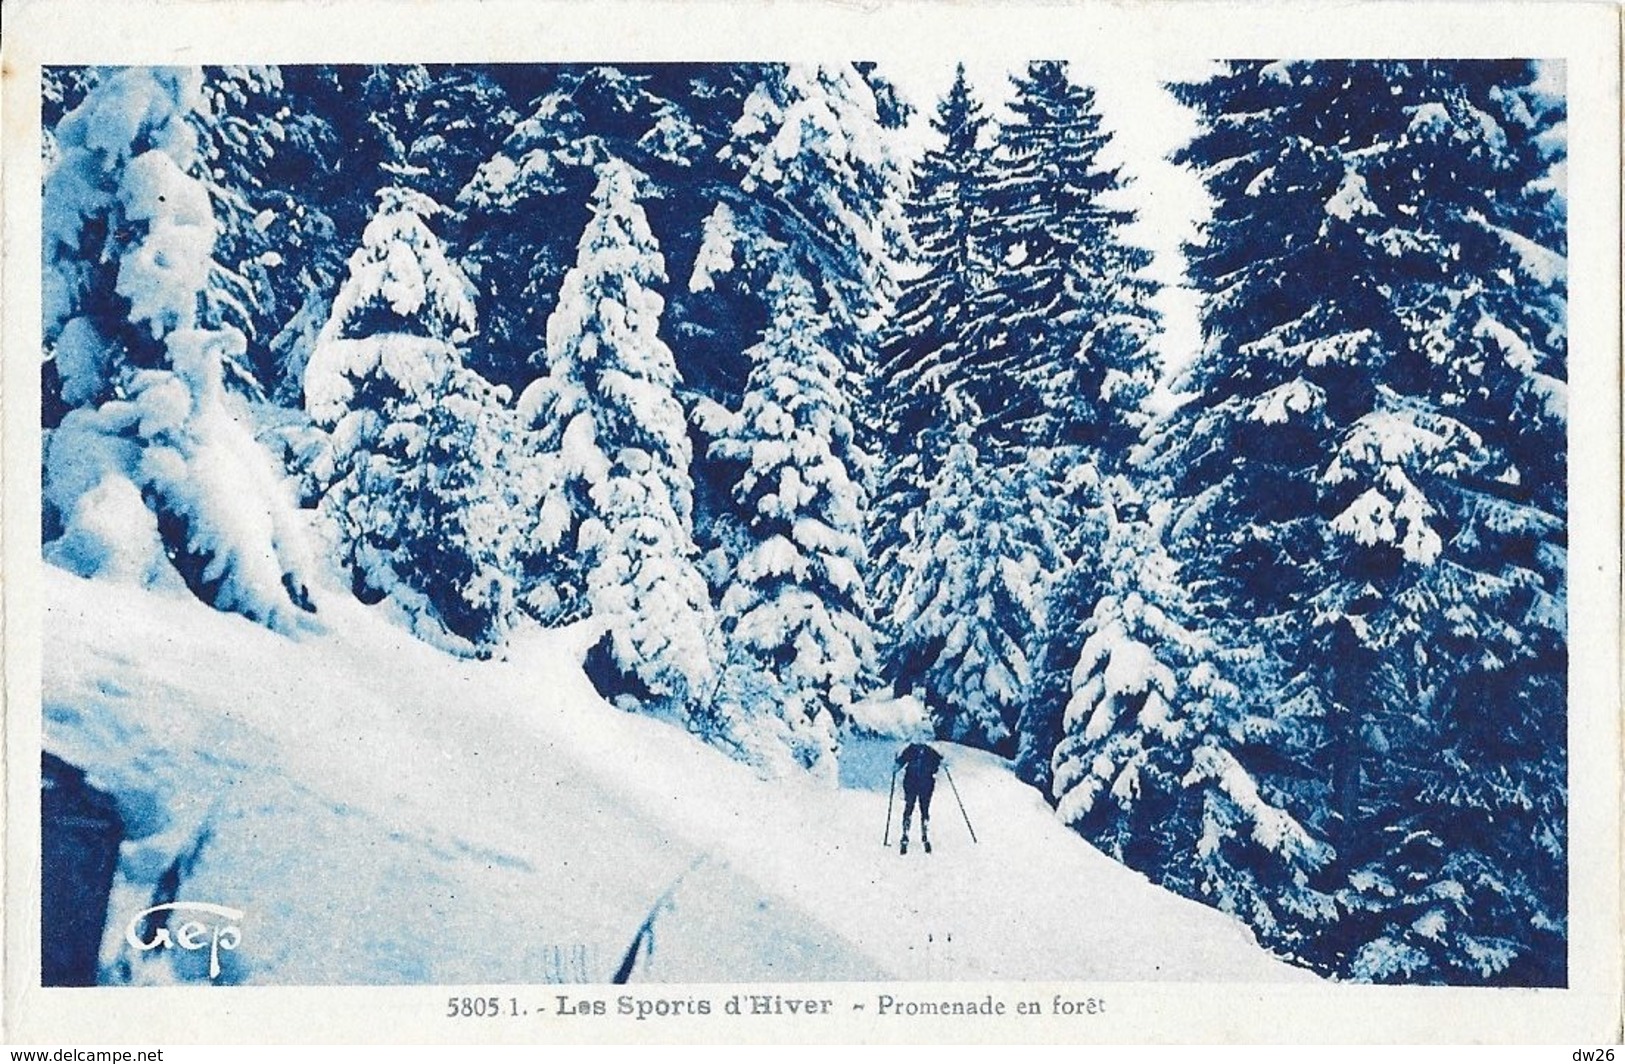 Les Sports D'Hiver - Ski De Randonnée: Promenade En Forêt - Carte GEP Cyan N° 5805.1 - Wintersport